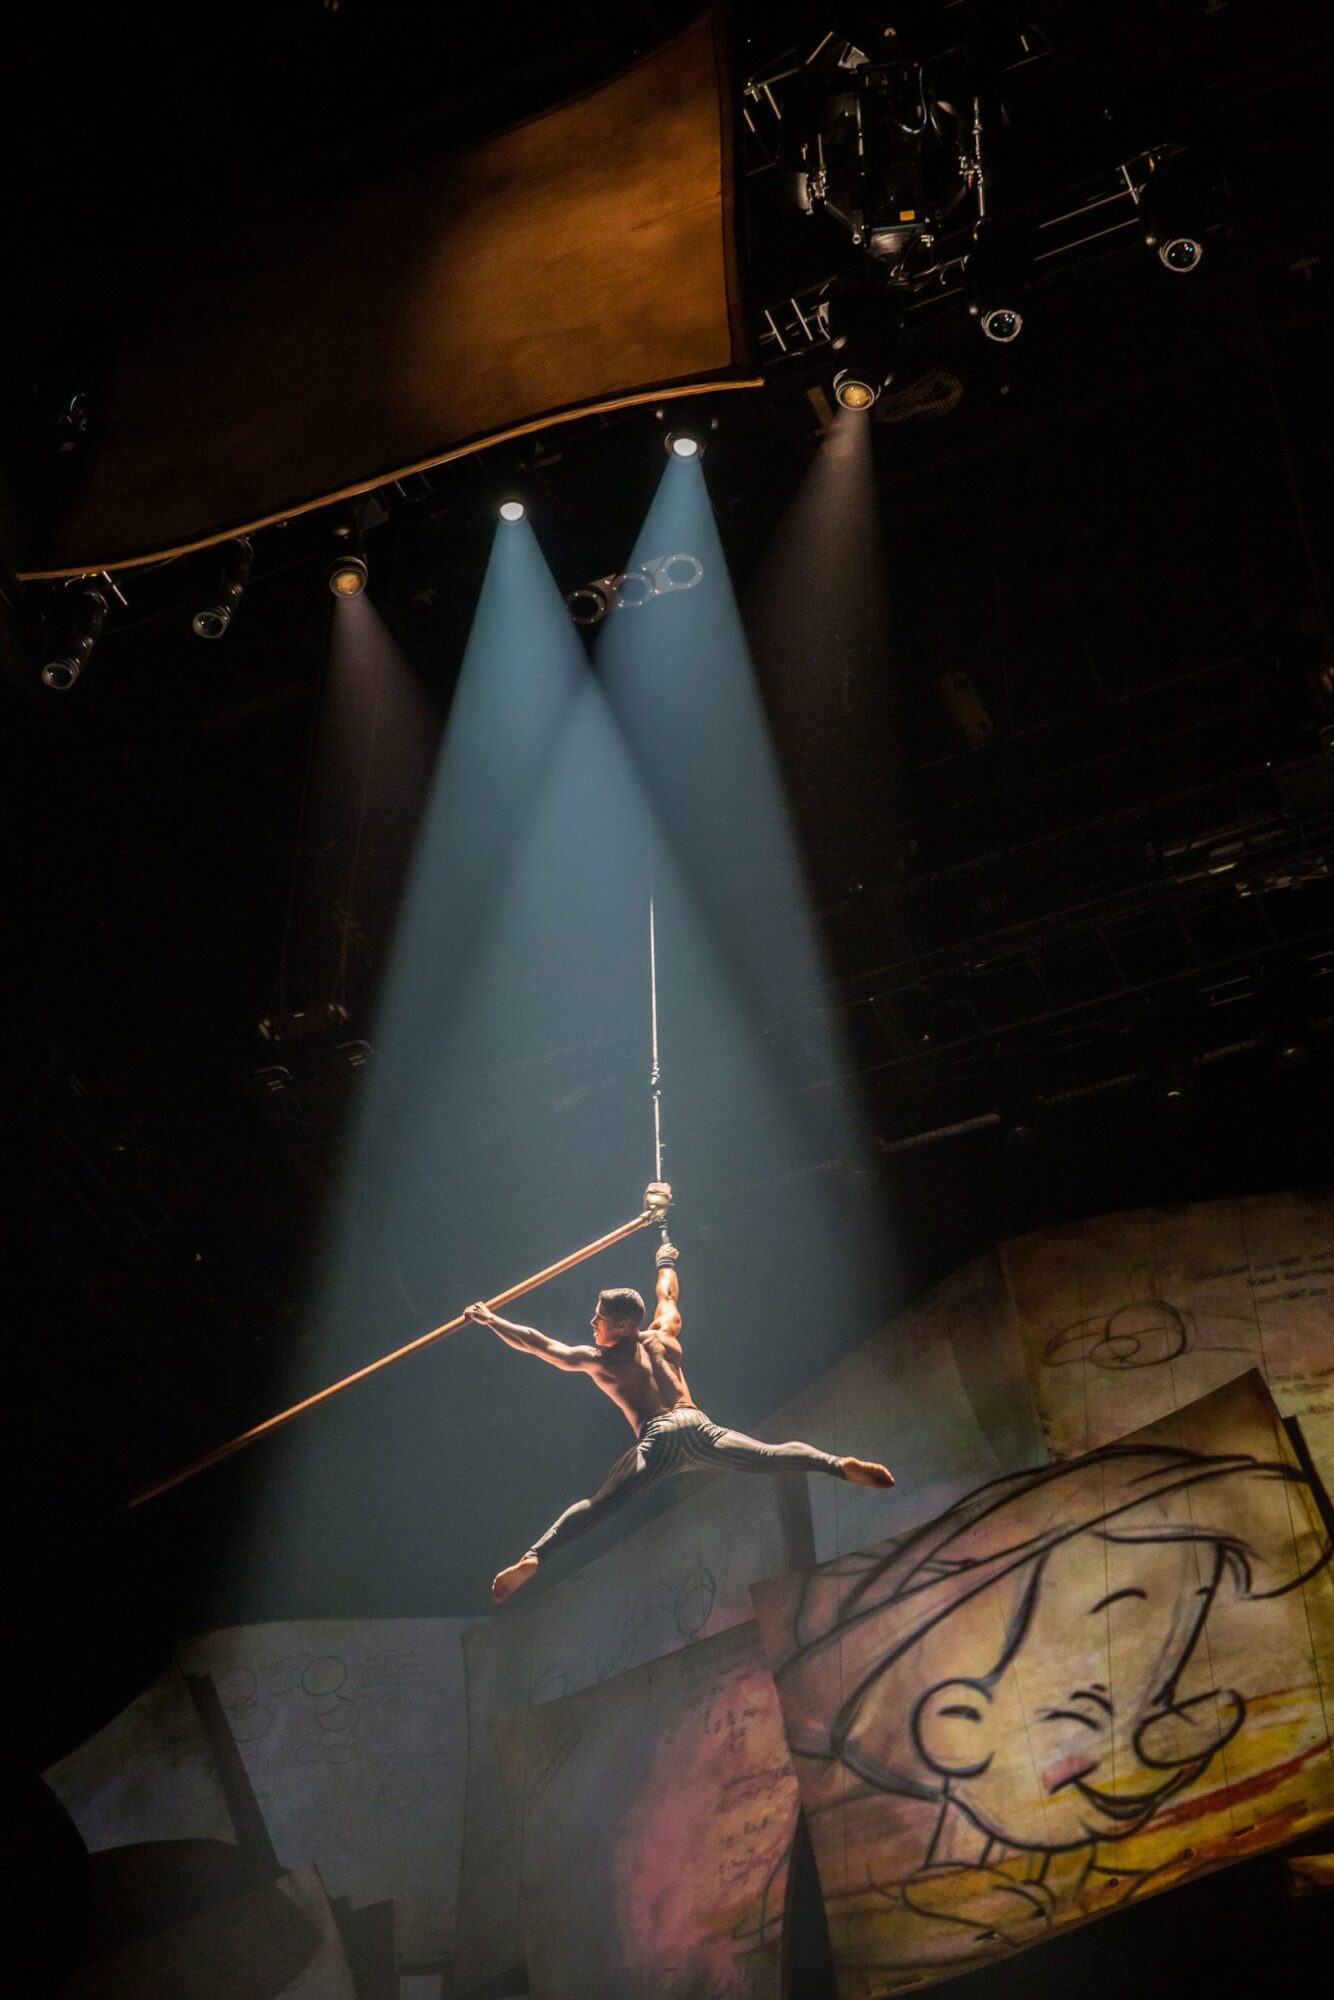 Cirque du Soleil Drawn to Life pencil